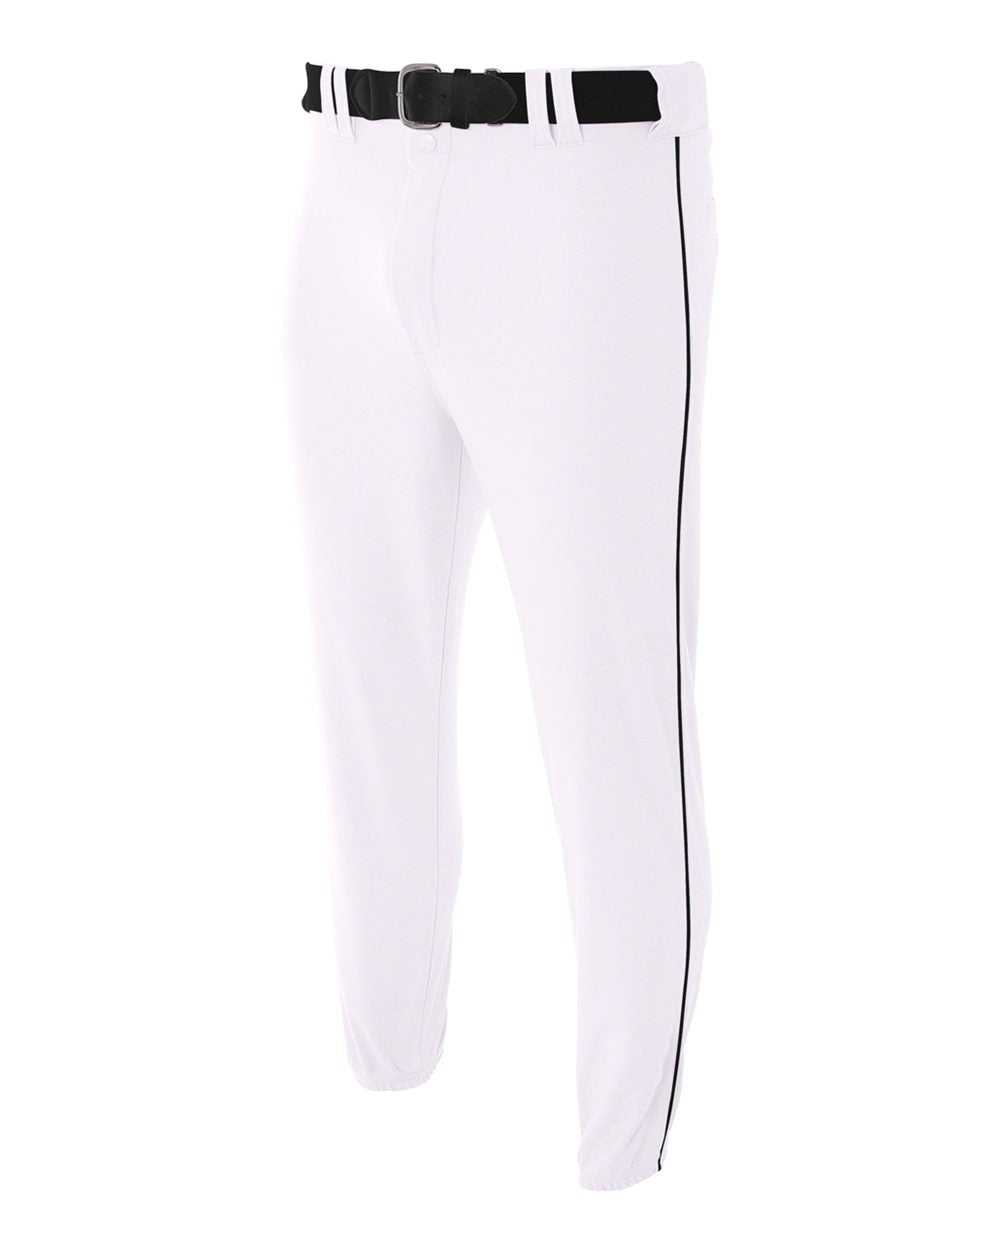 A4 NB6178 Youth Pro Style Elastic Bottom Baseball Pant - White Black - HIT a Double